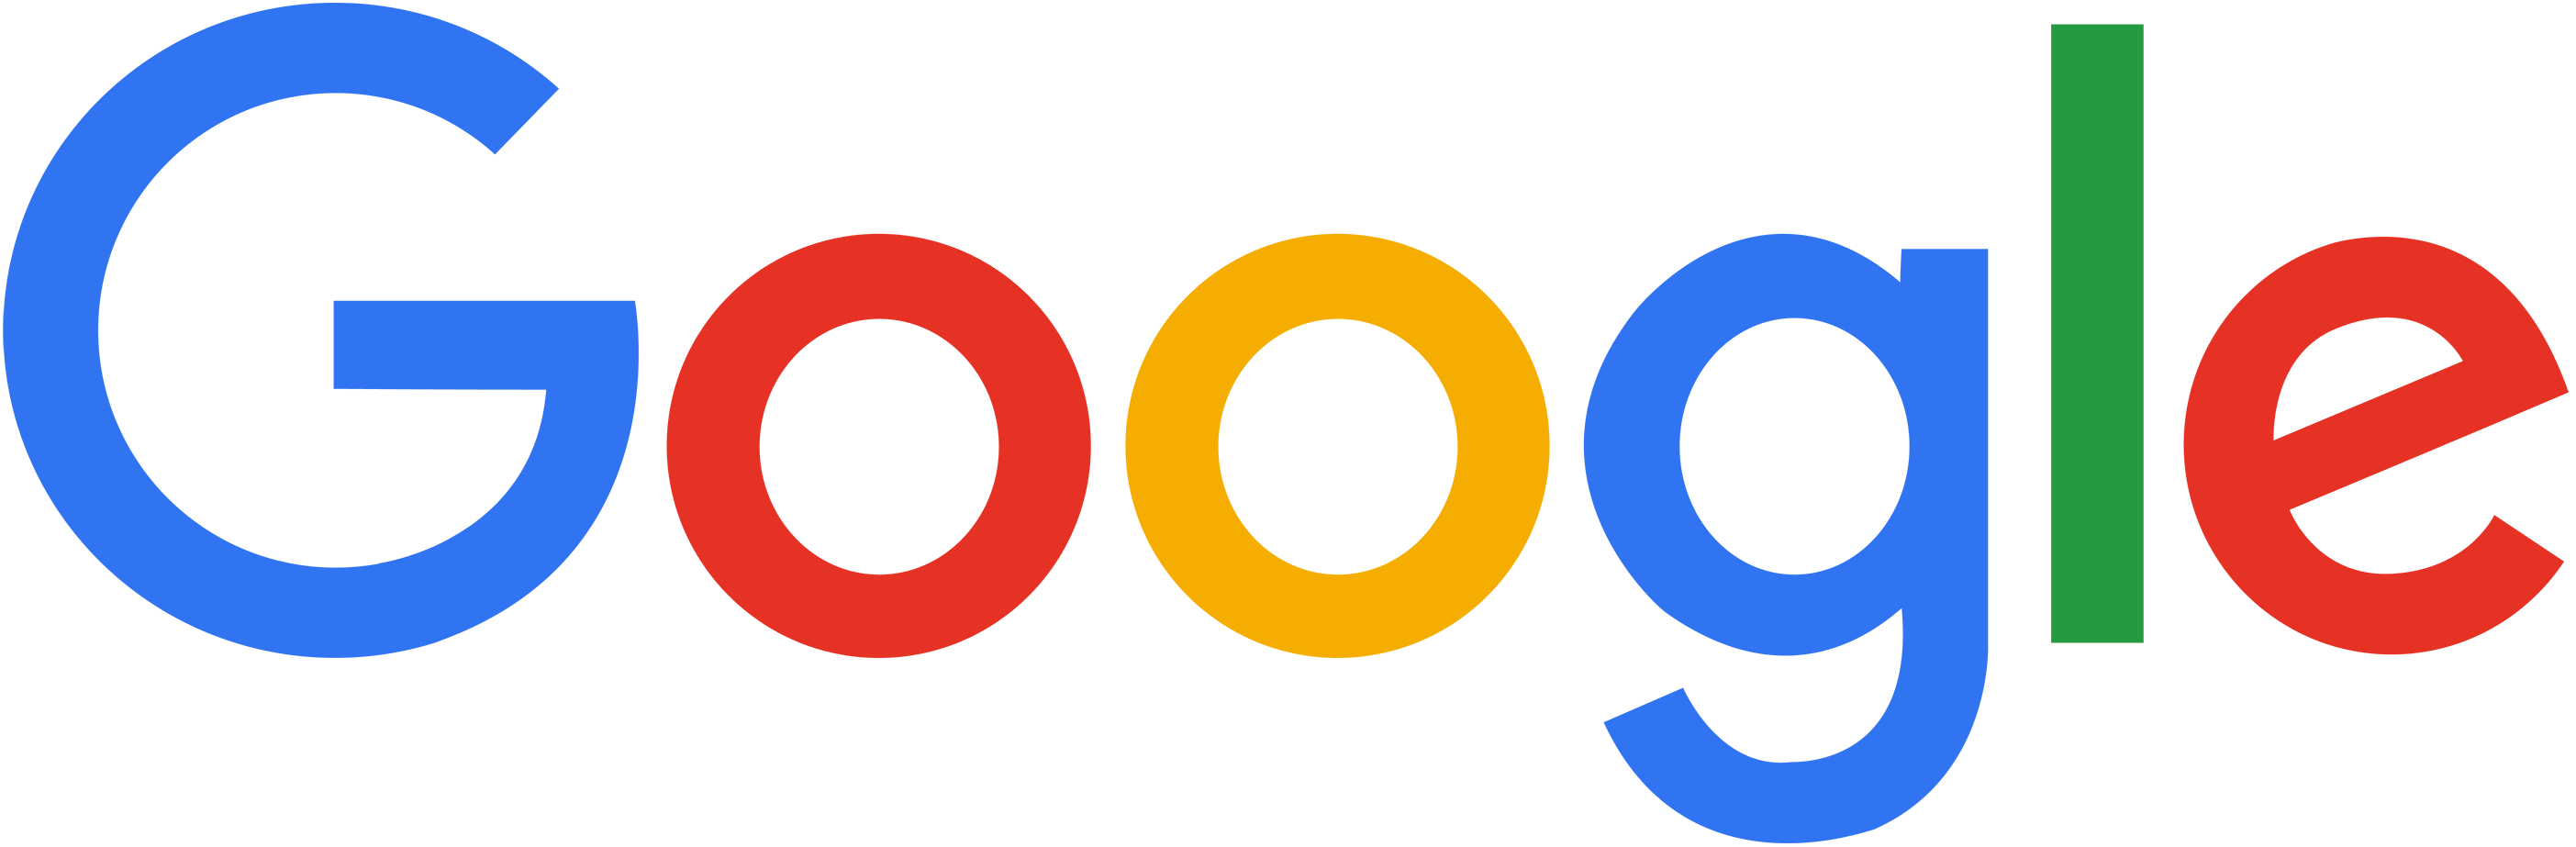 Logo Google Plus Free Clipart HQ PNG Image